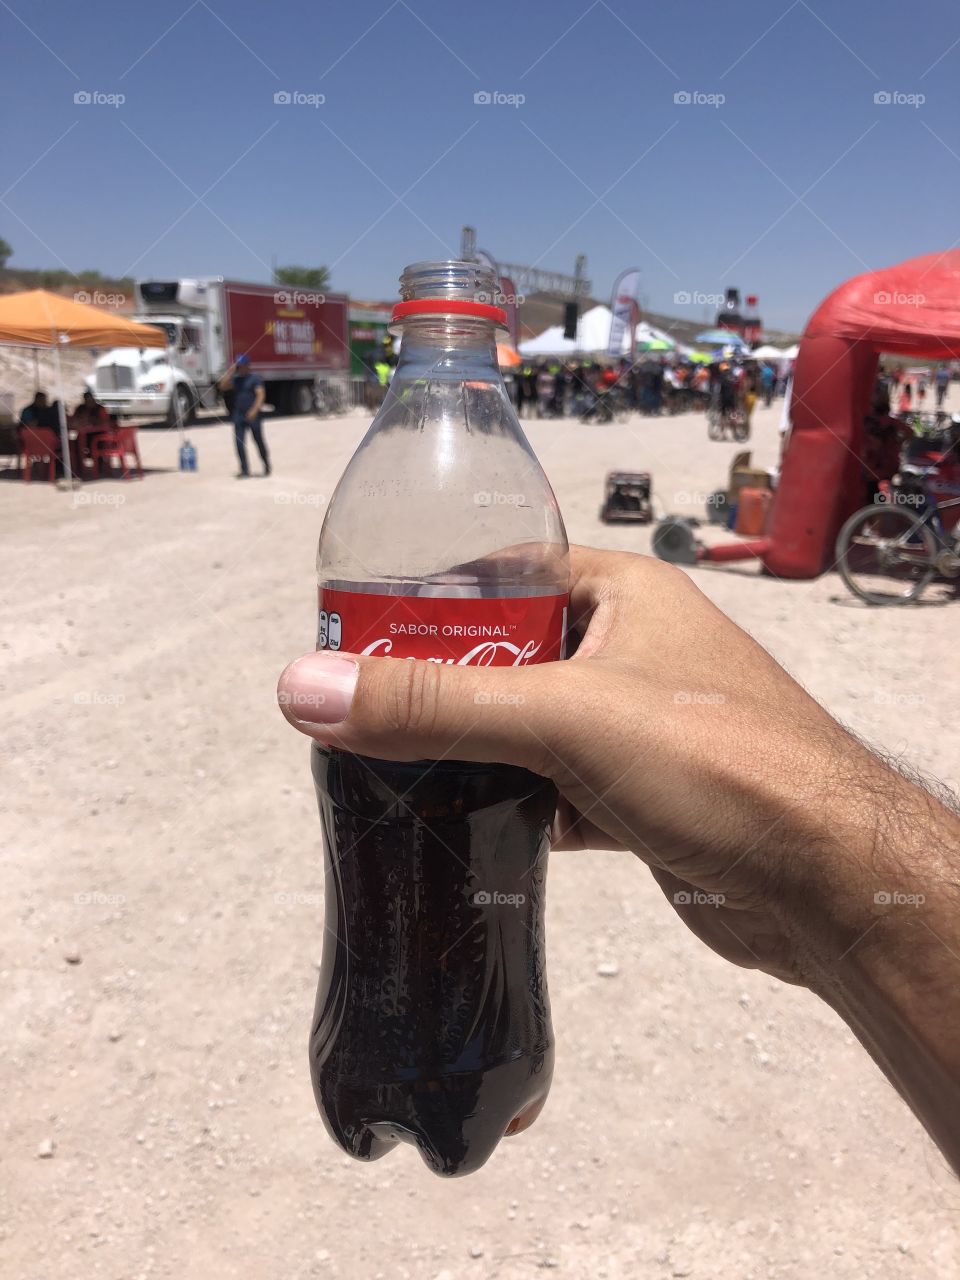 Coca cola 